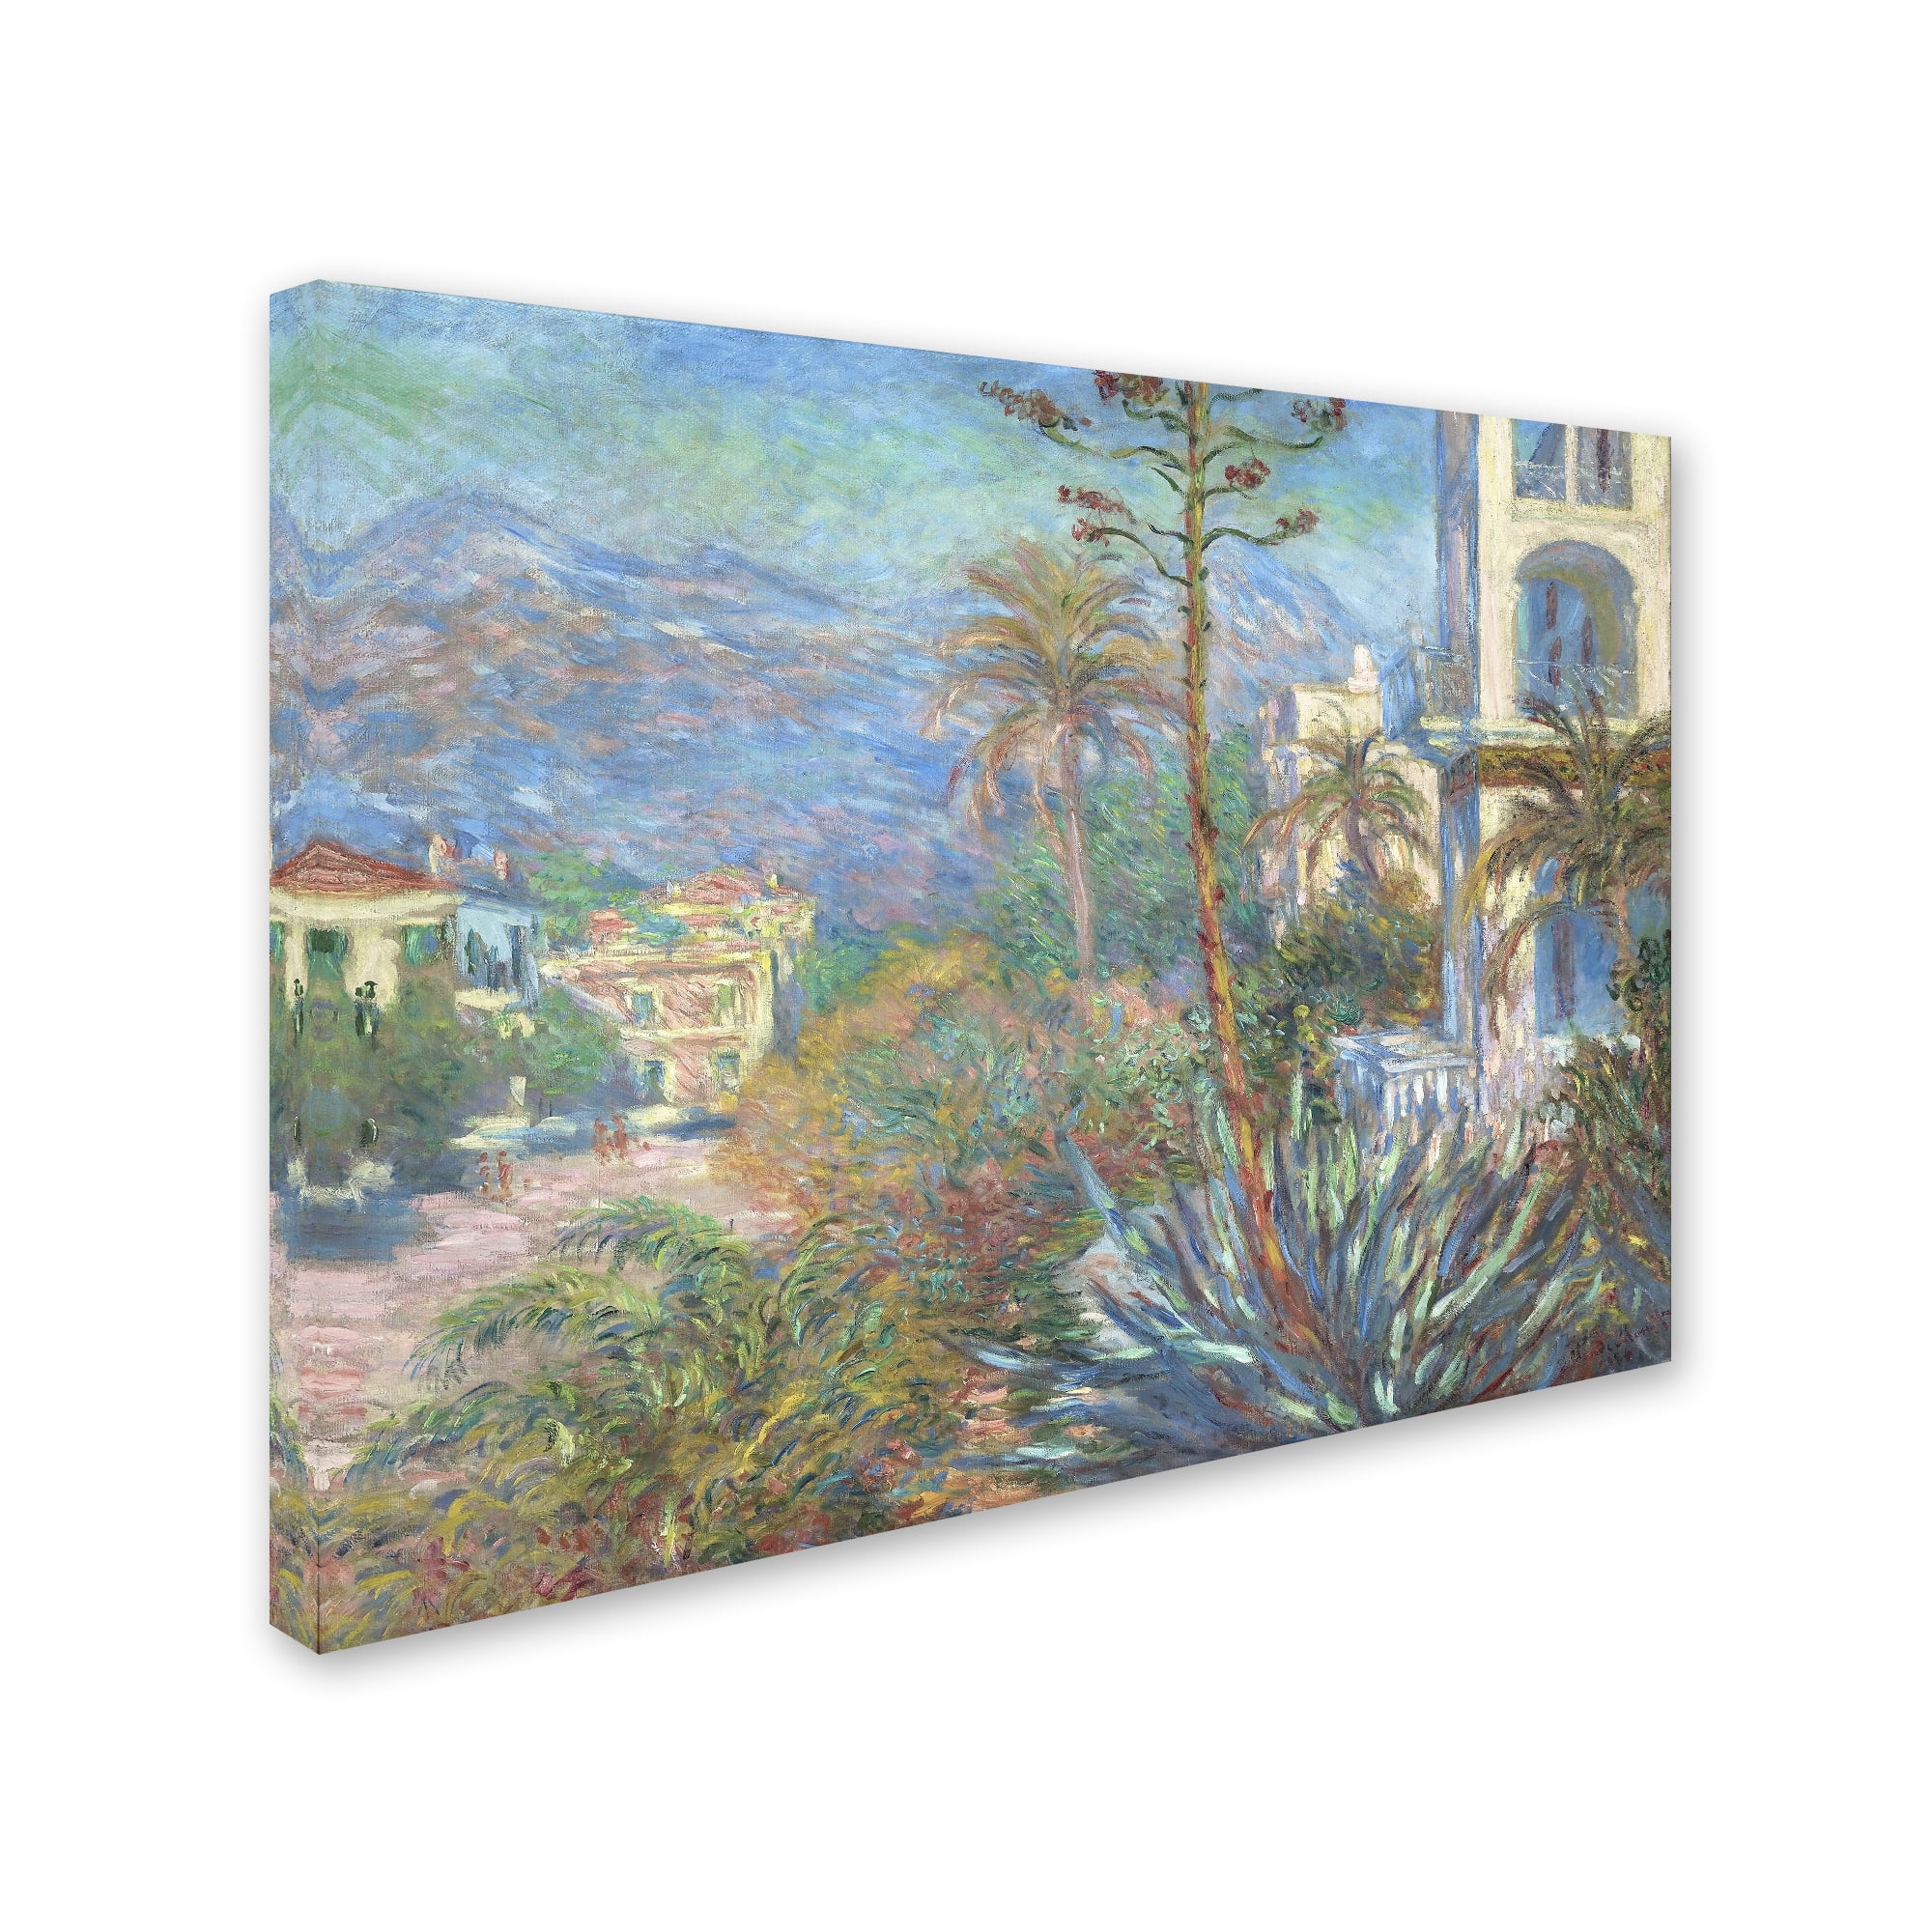 Æsel dyr Positiv Villas At Bordighera' Canvas Art by Monet - Walmart.com